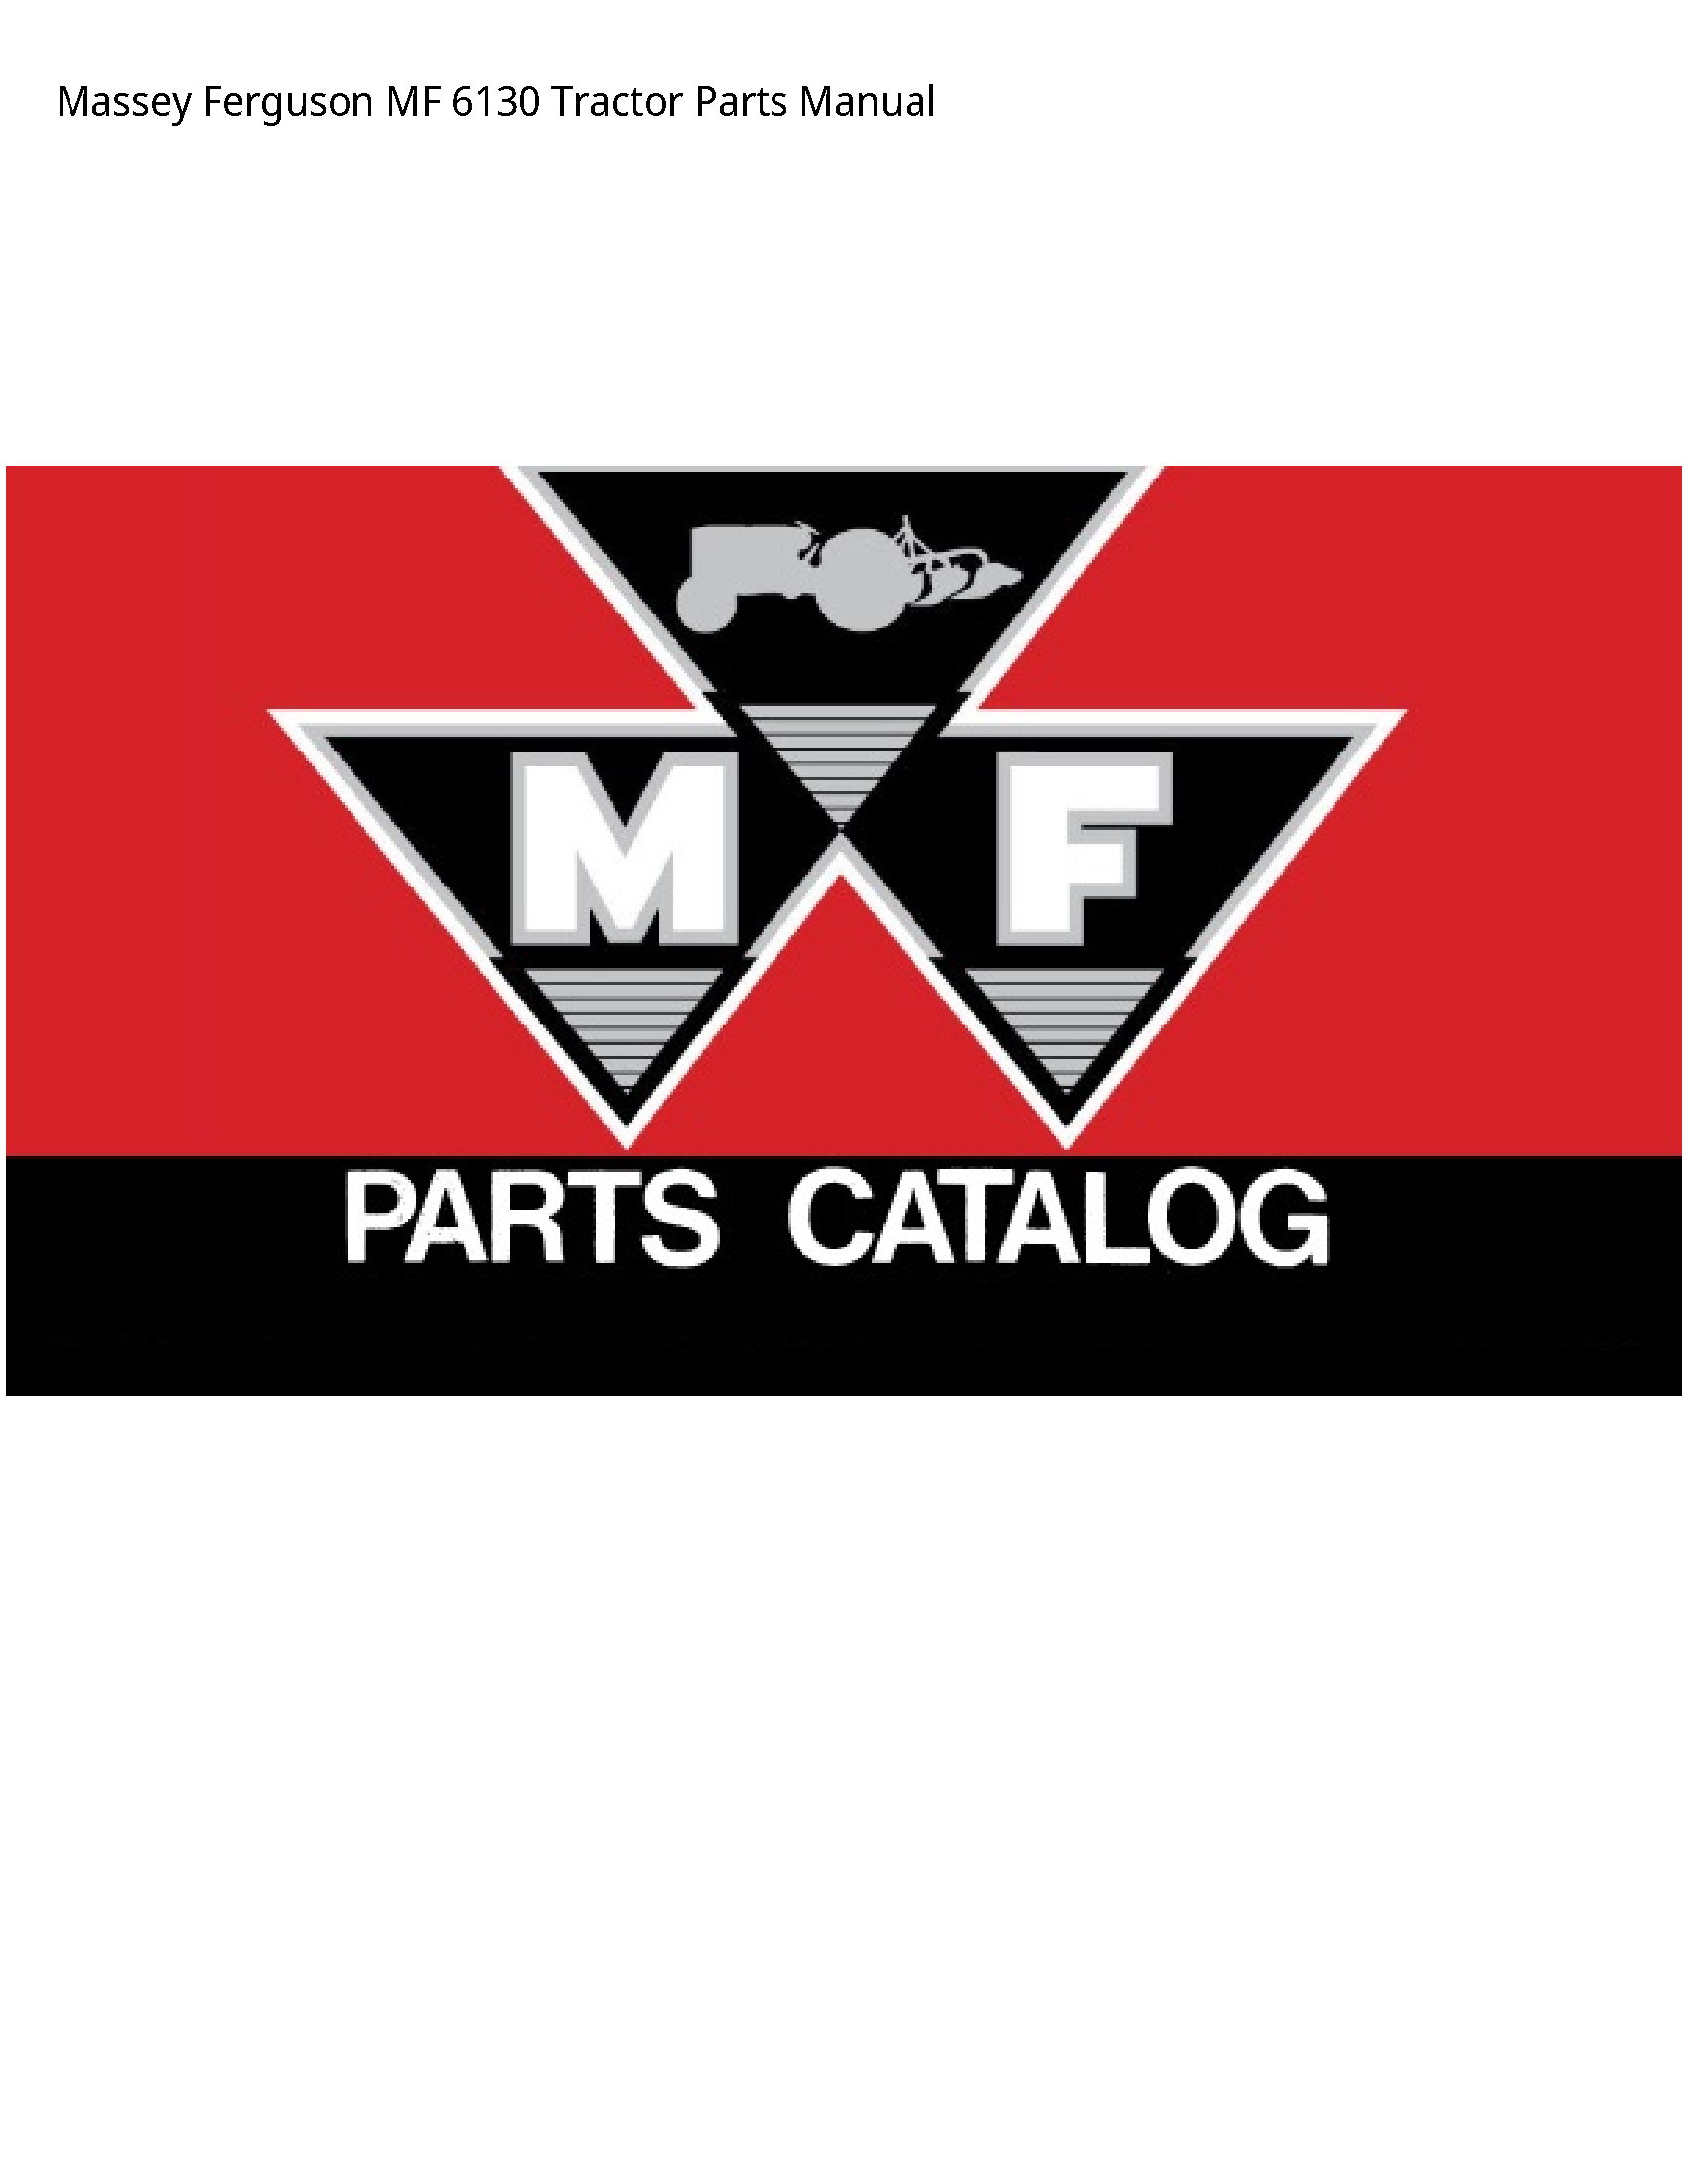 Massey Ferguson 6130 MF Tractor Parts manual